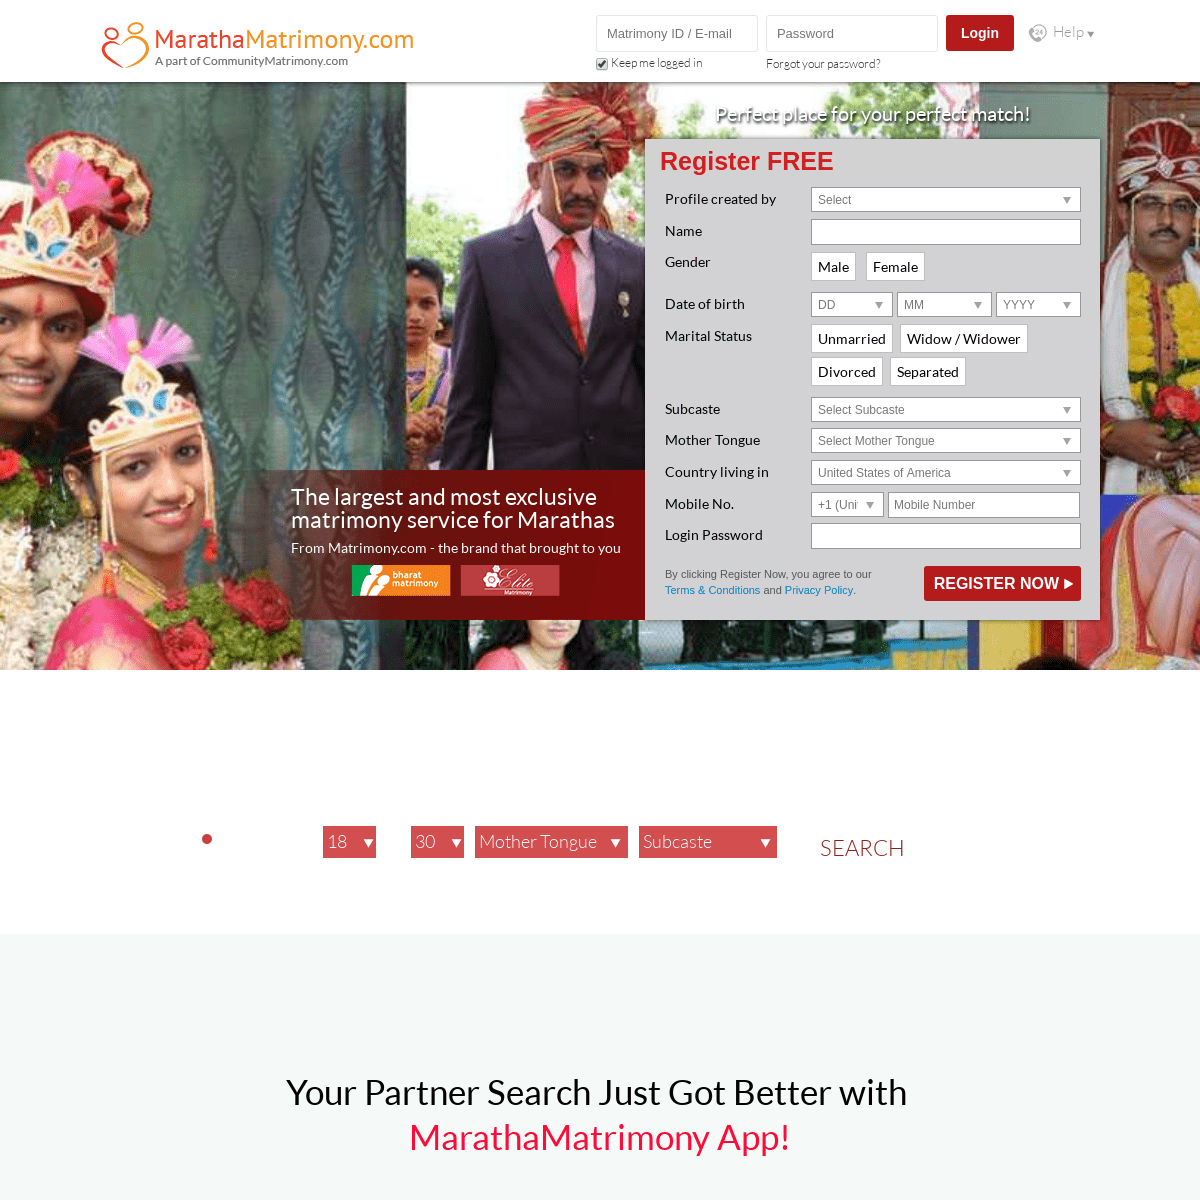 Maratha Matrimony - The No. 1 Matrimony Site for Marathas - MarathaMatrimony.com